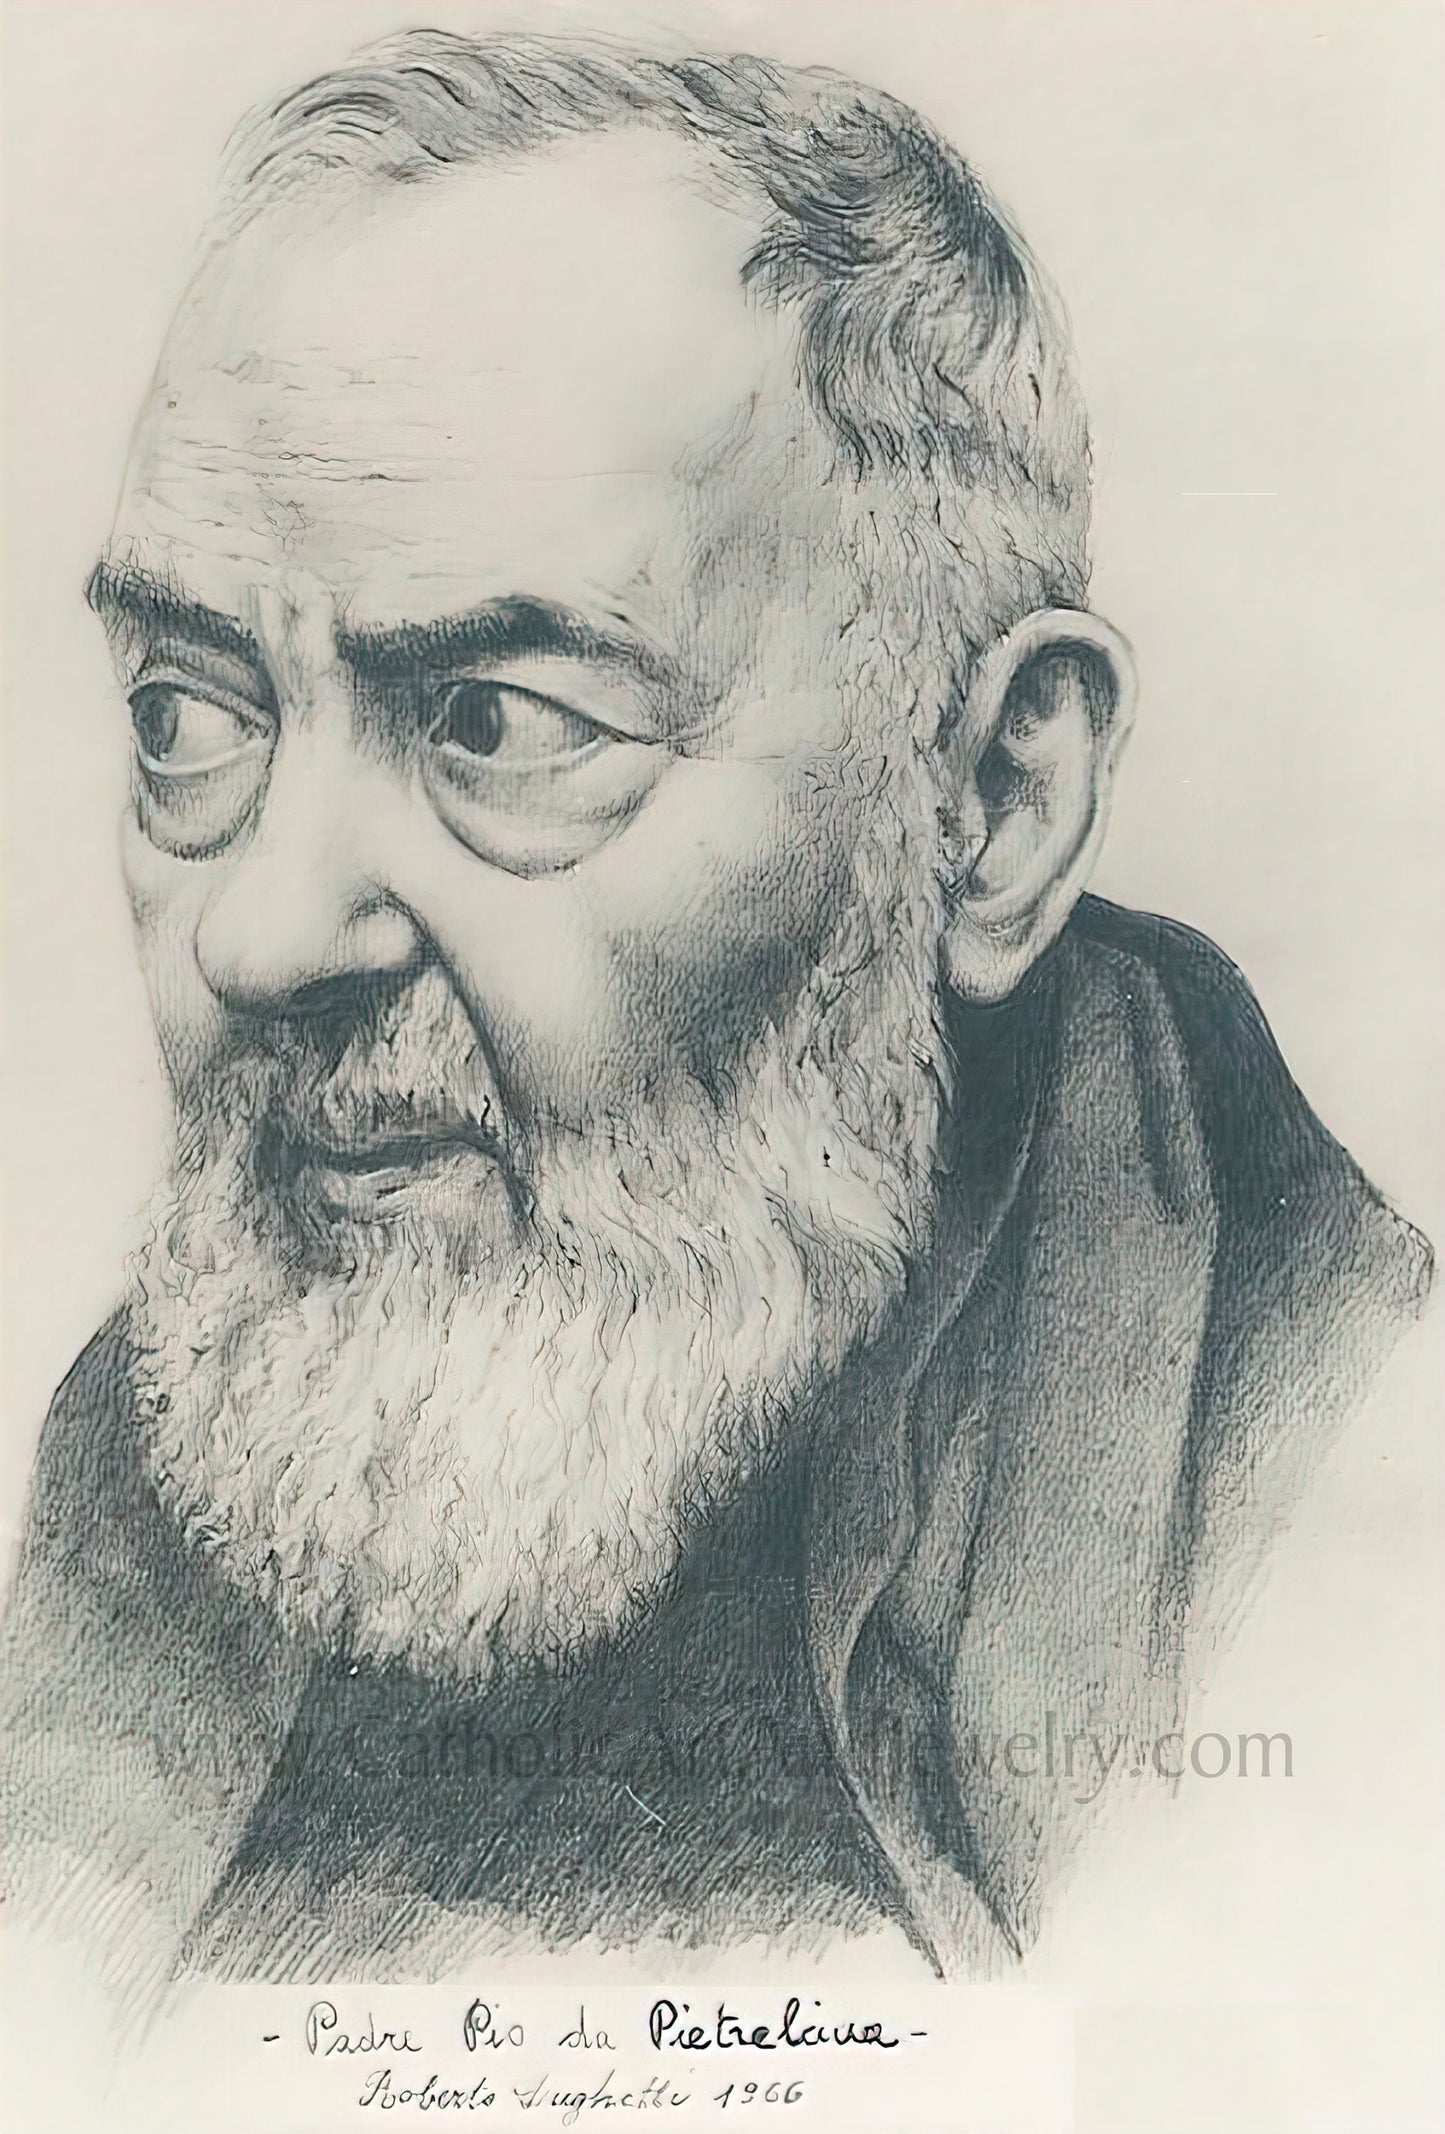 St. Padre Pio de Pietrelcina – Catholic Art Print – Archival Quality